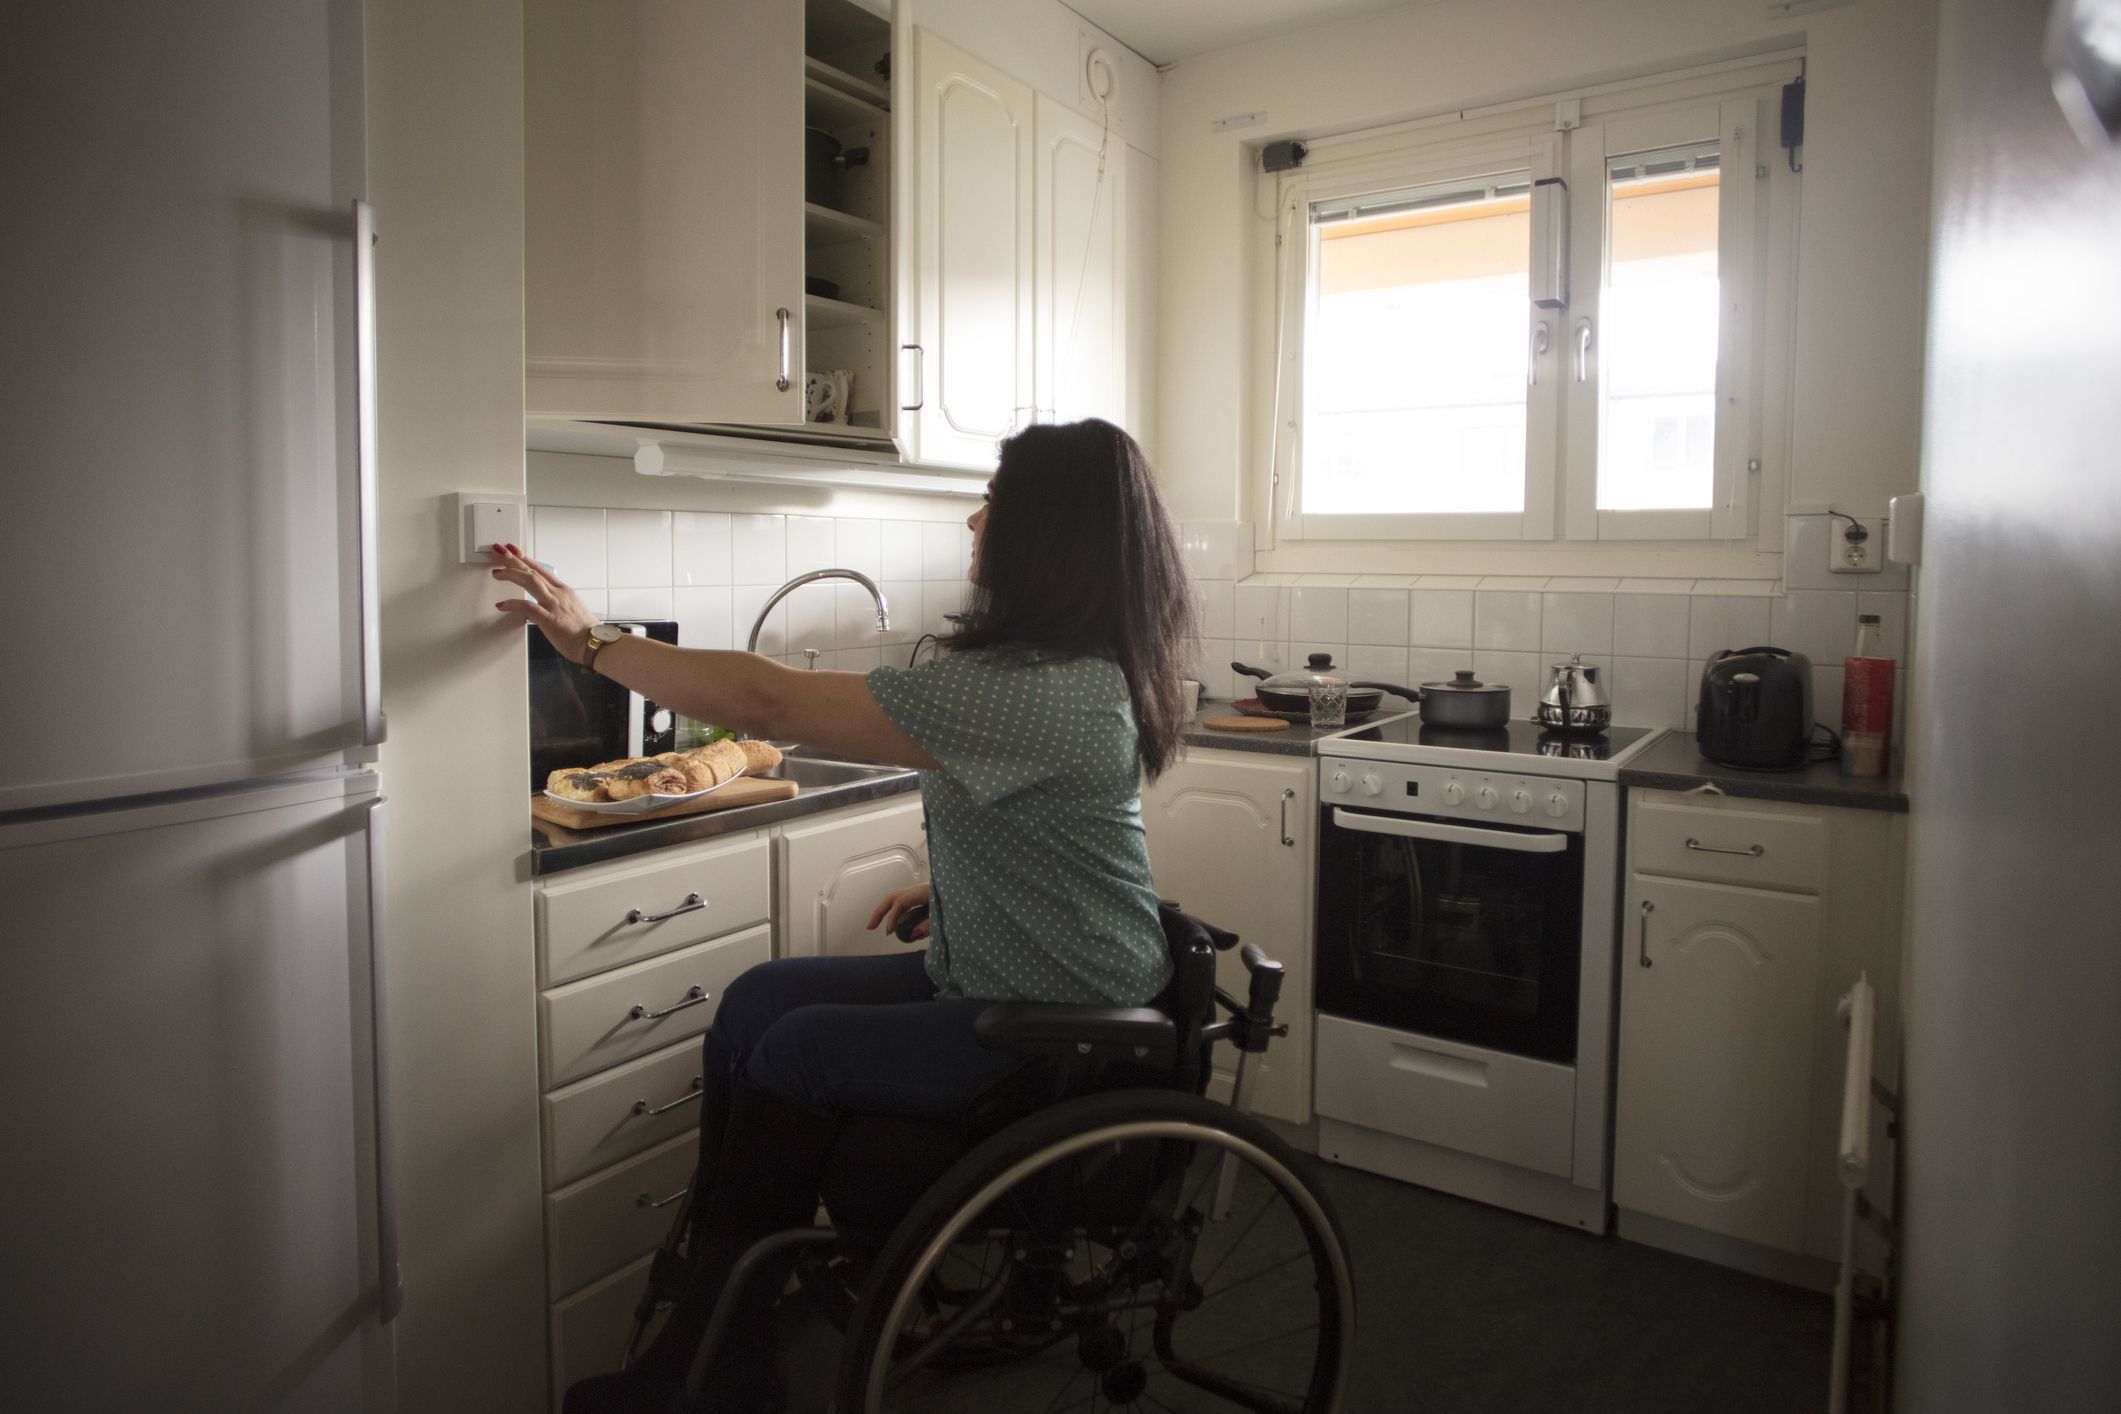 HK Investor Puts $200m in Booming Australian Disability Housing Sector